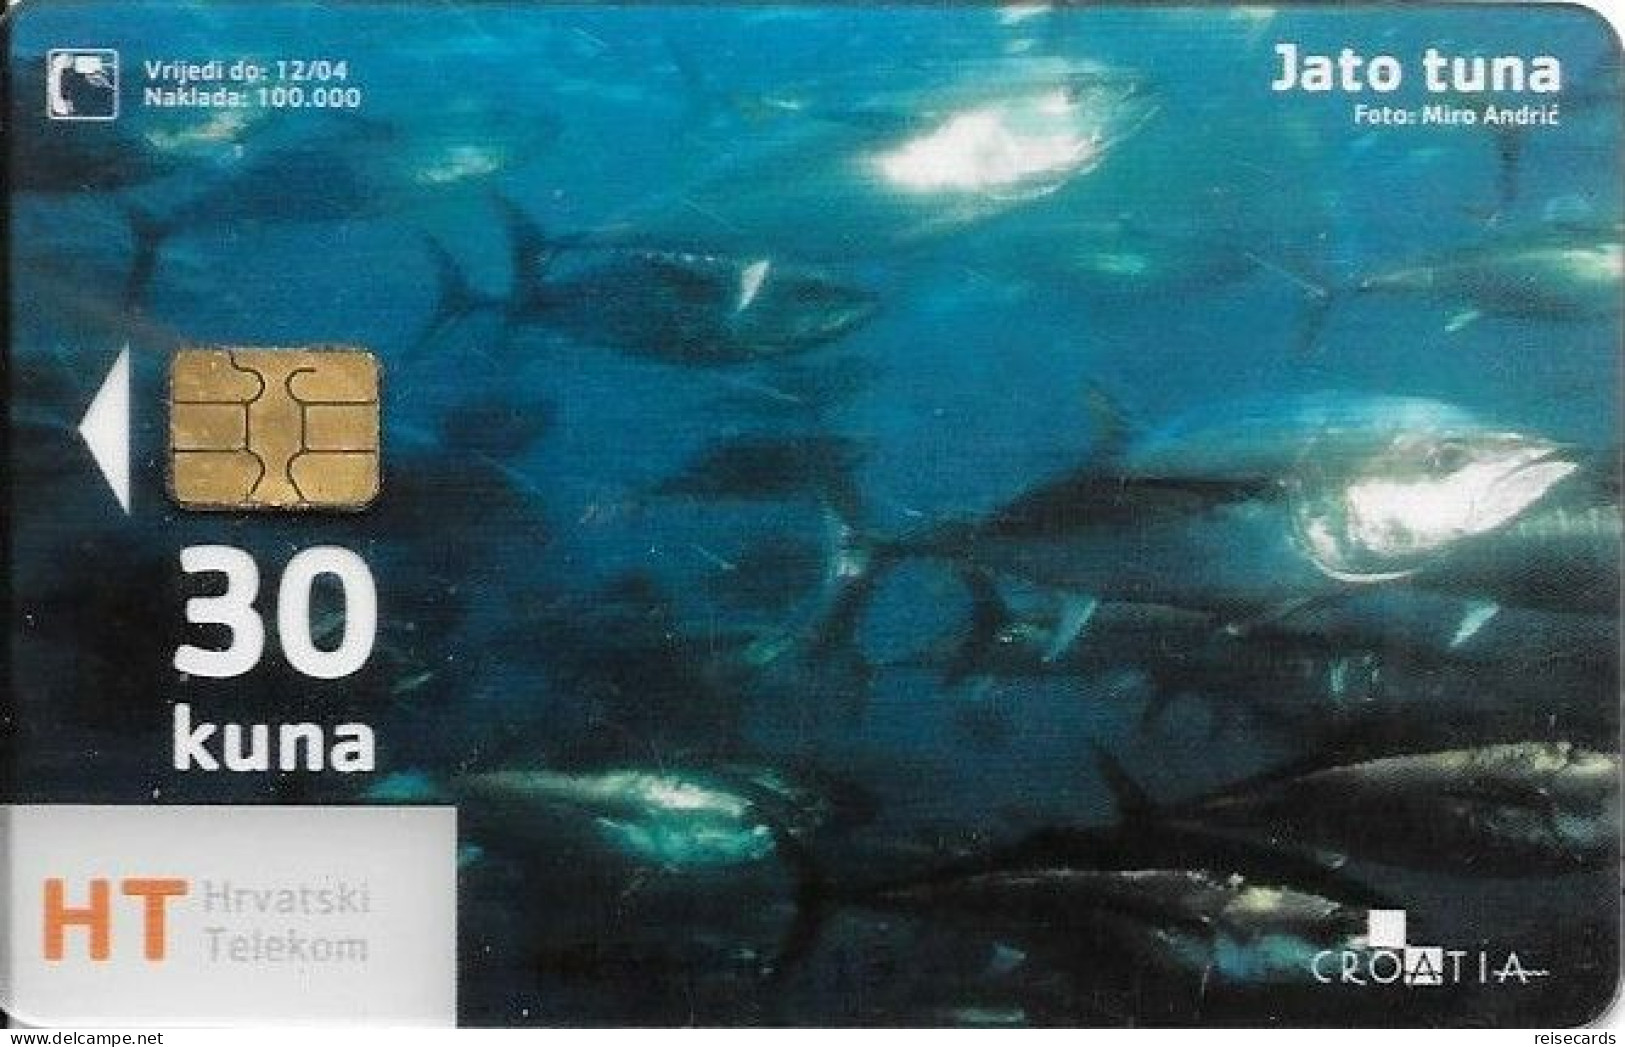 Croatia: Hrvatski Telekom - Underwater World, Jato Tuna. Transparent - Croatia